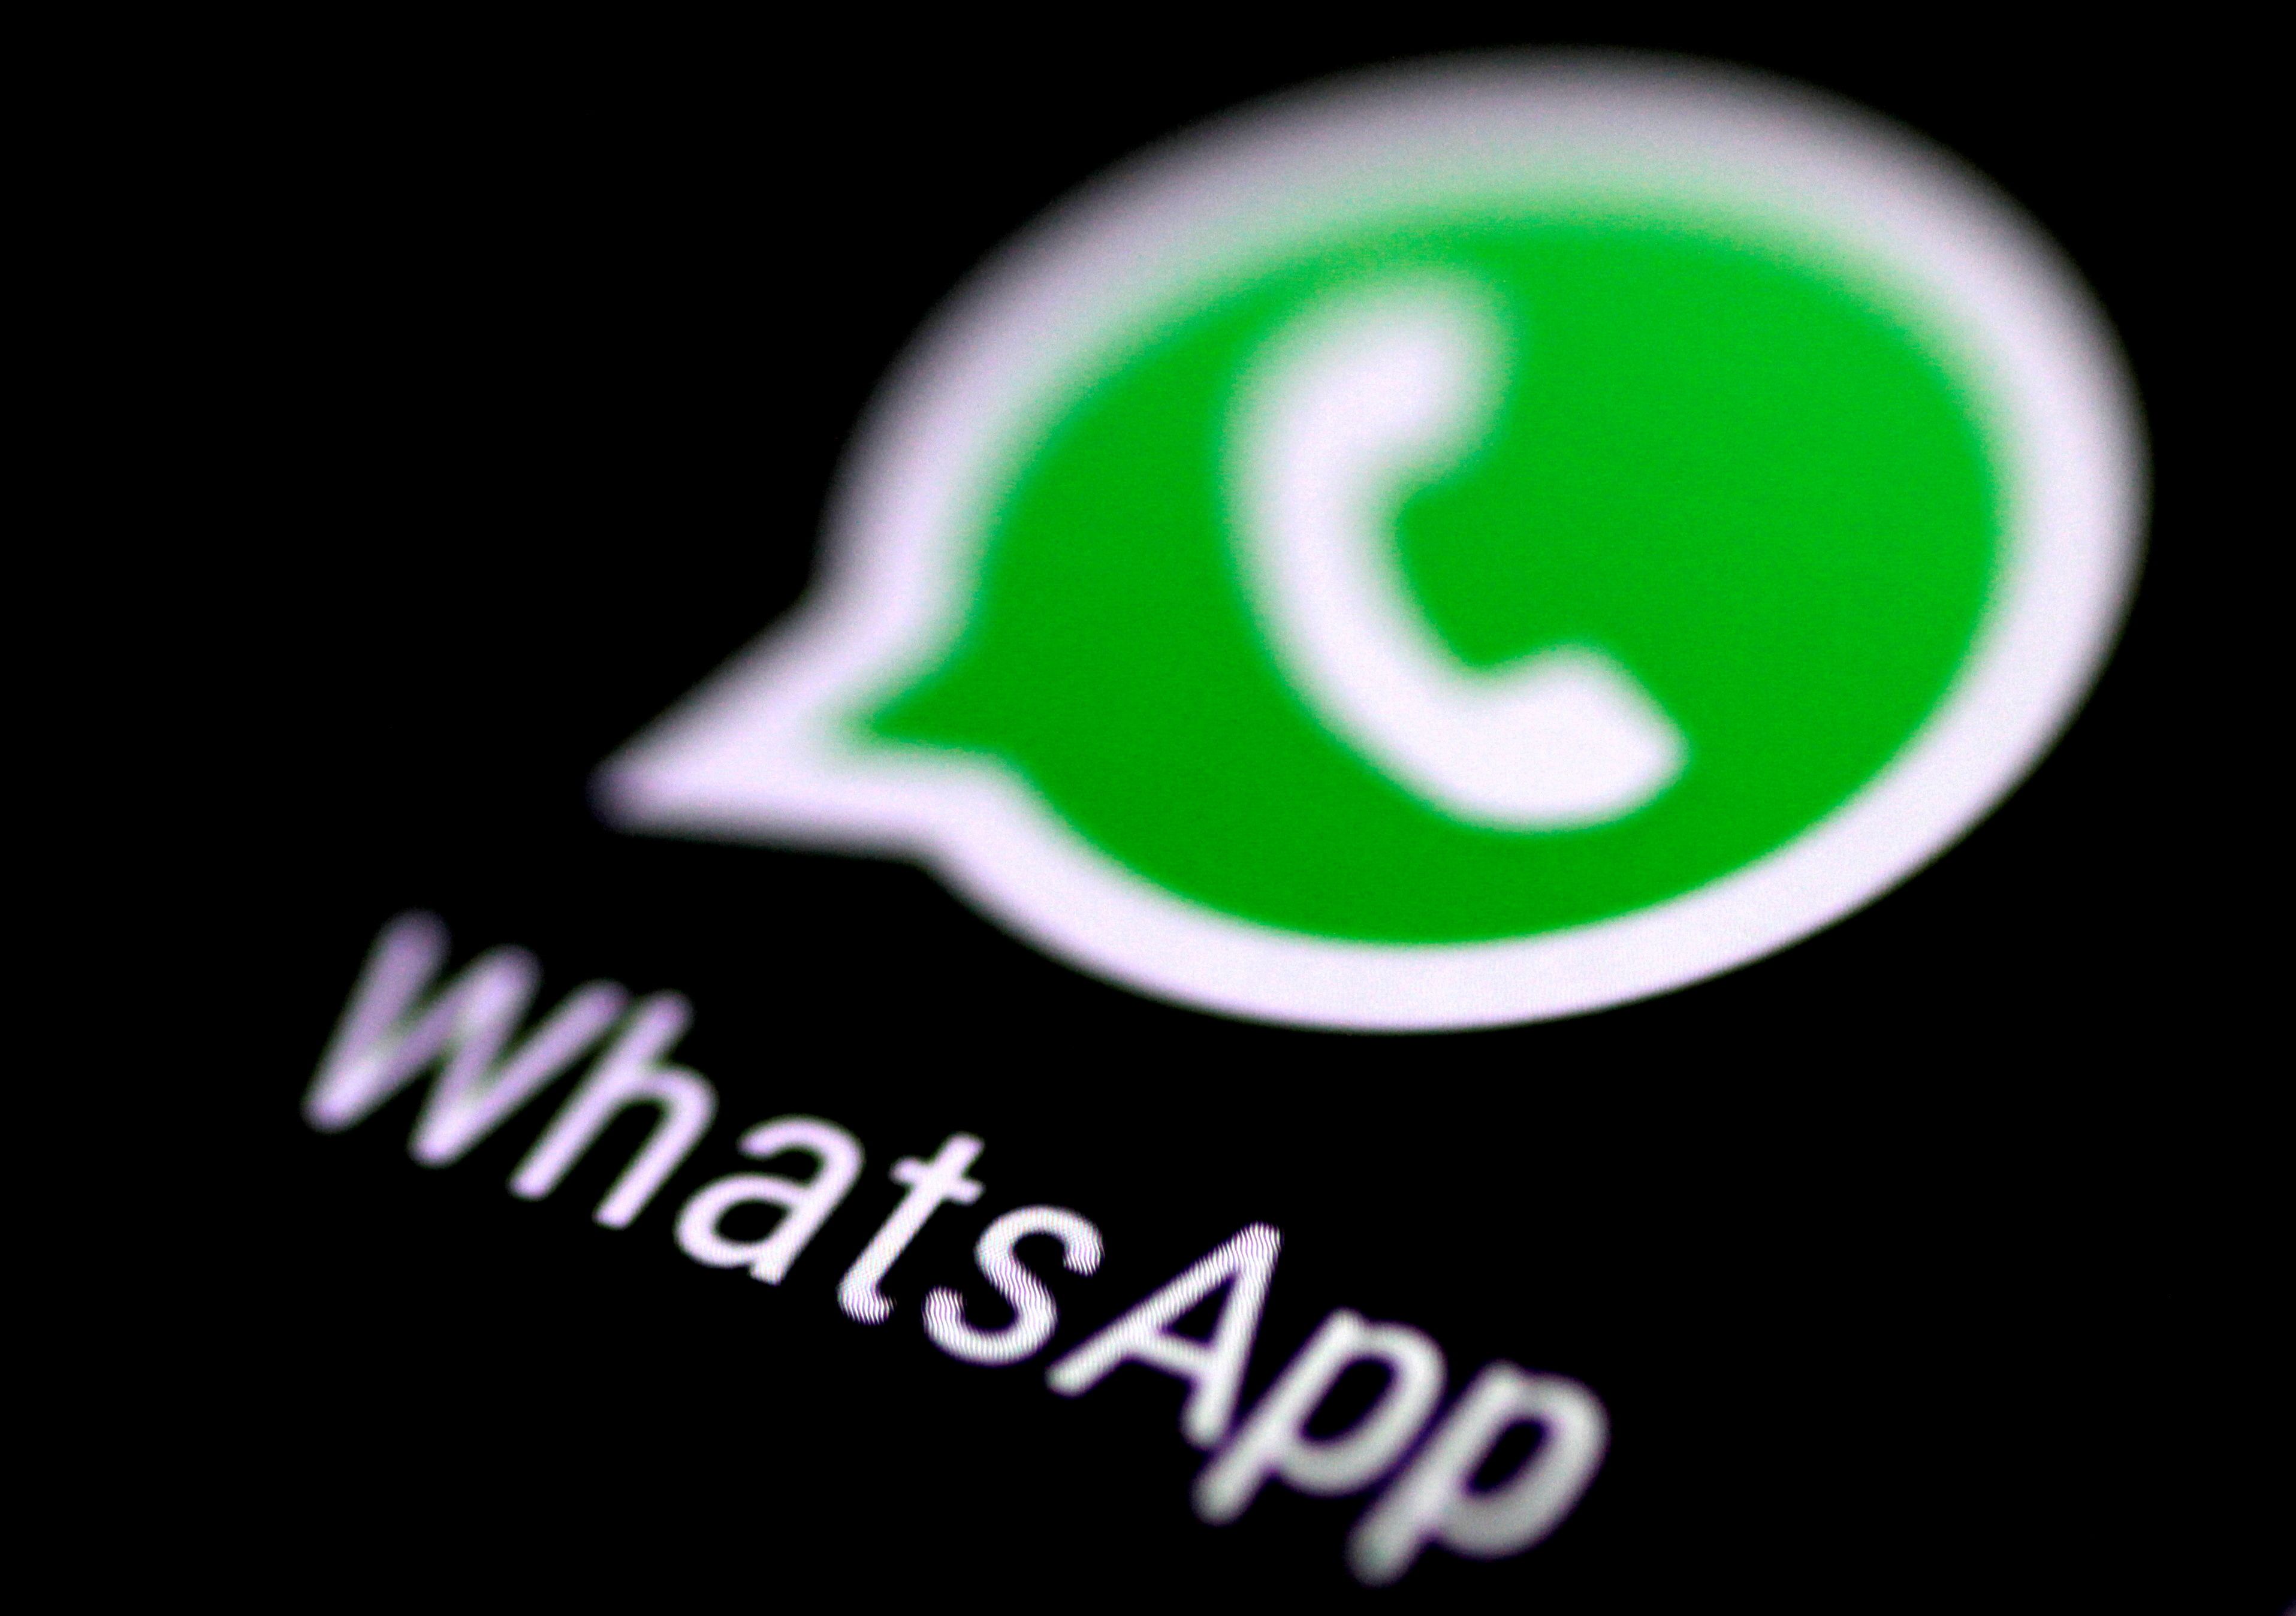 Error en servidores de WhatsApp afecta a usuarios con nombres que empiezan por 